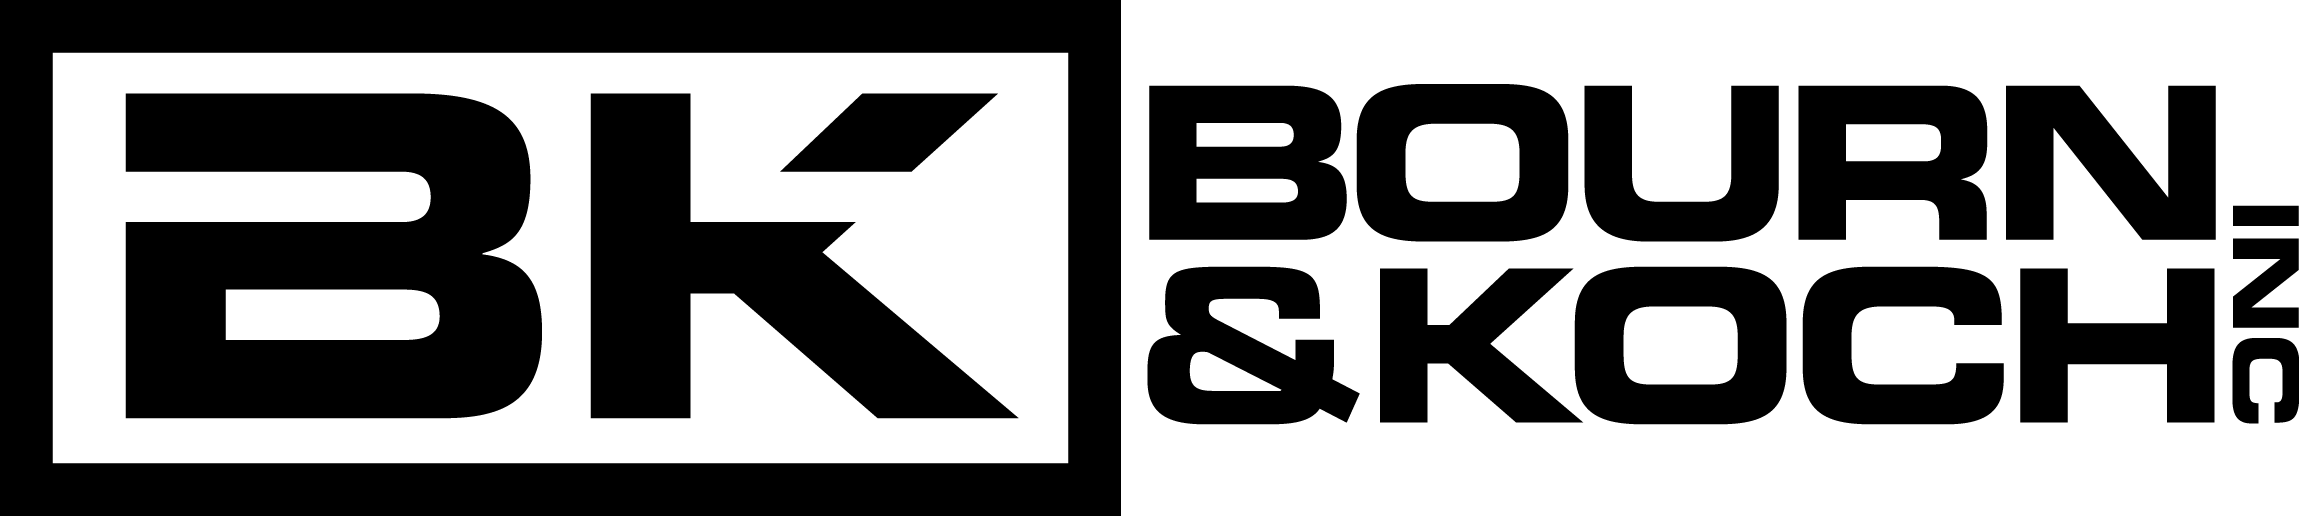 Bourn & Koch Logo